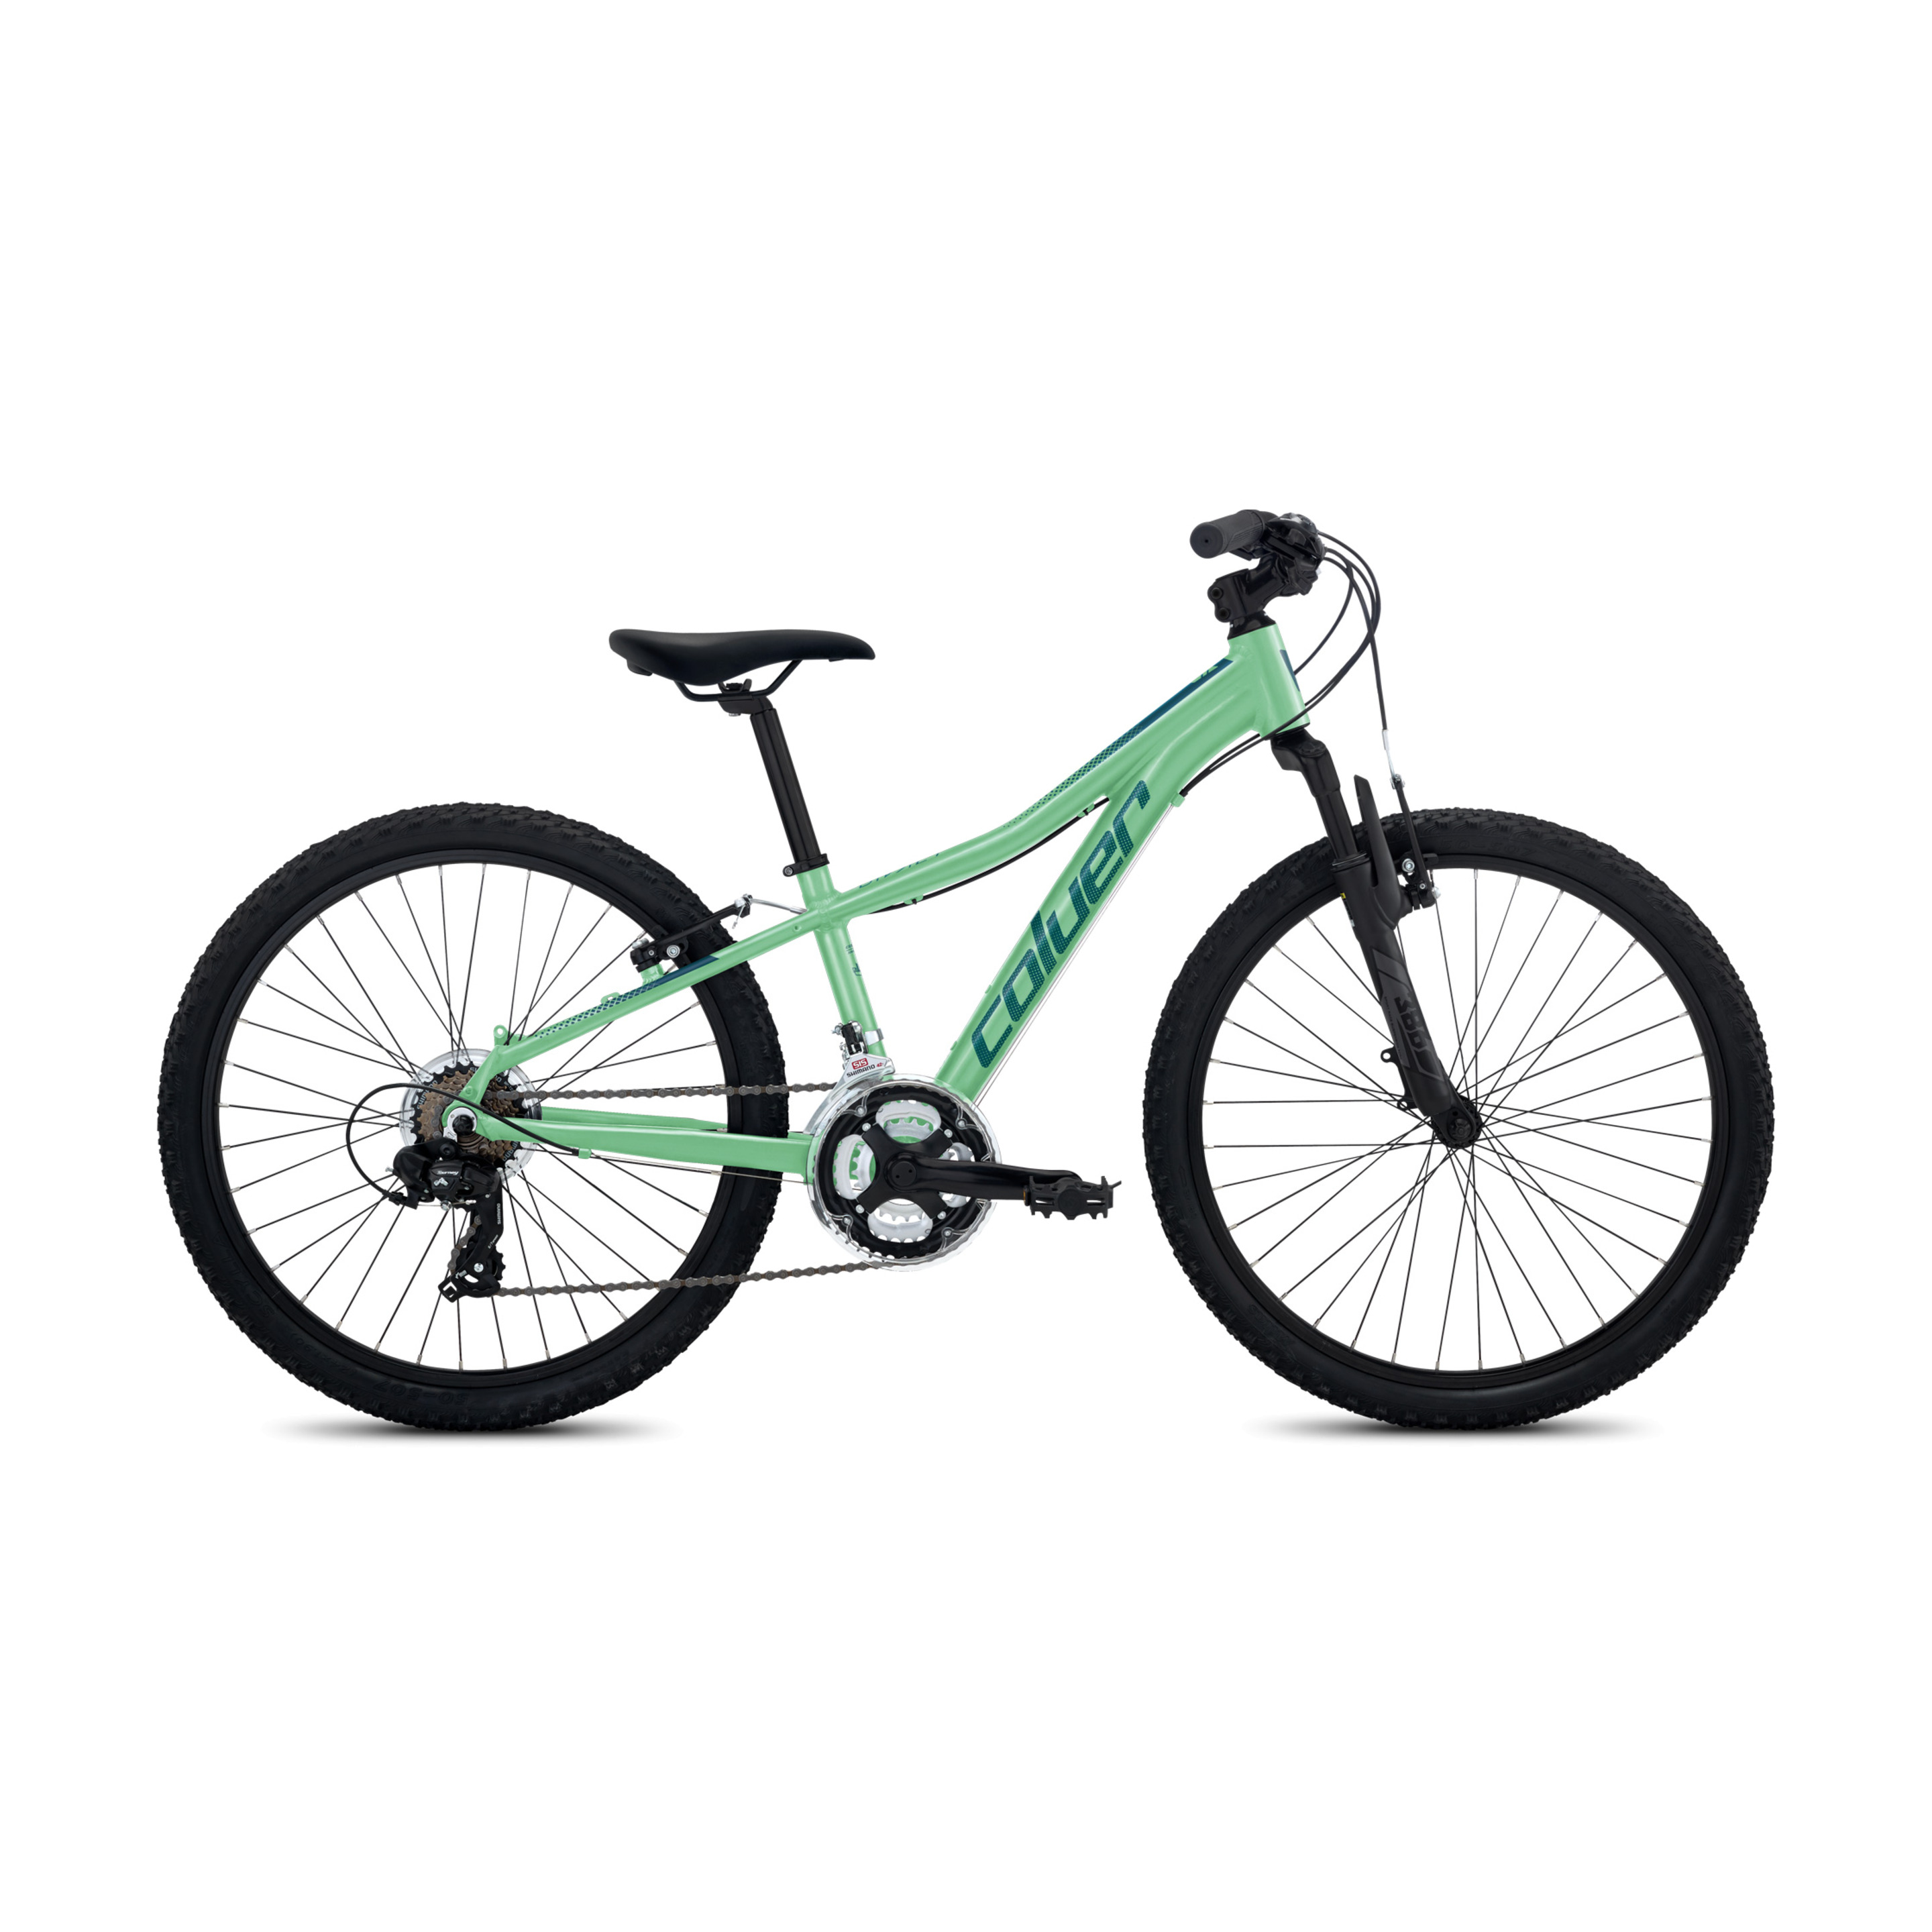 Bicicleta Coluer Diva 241 Verde